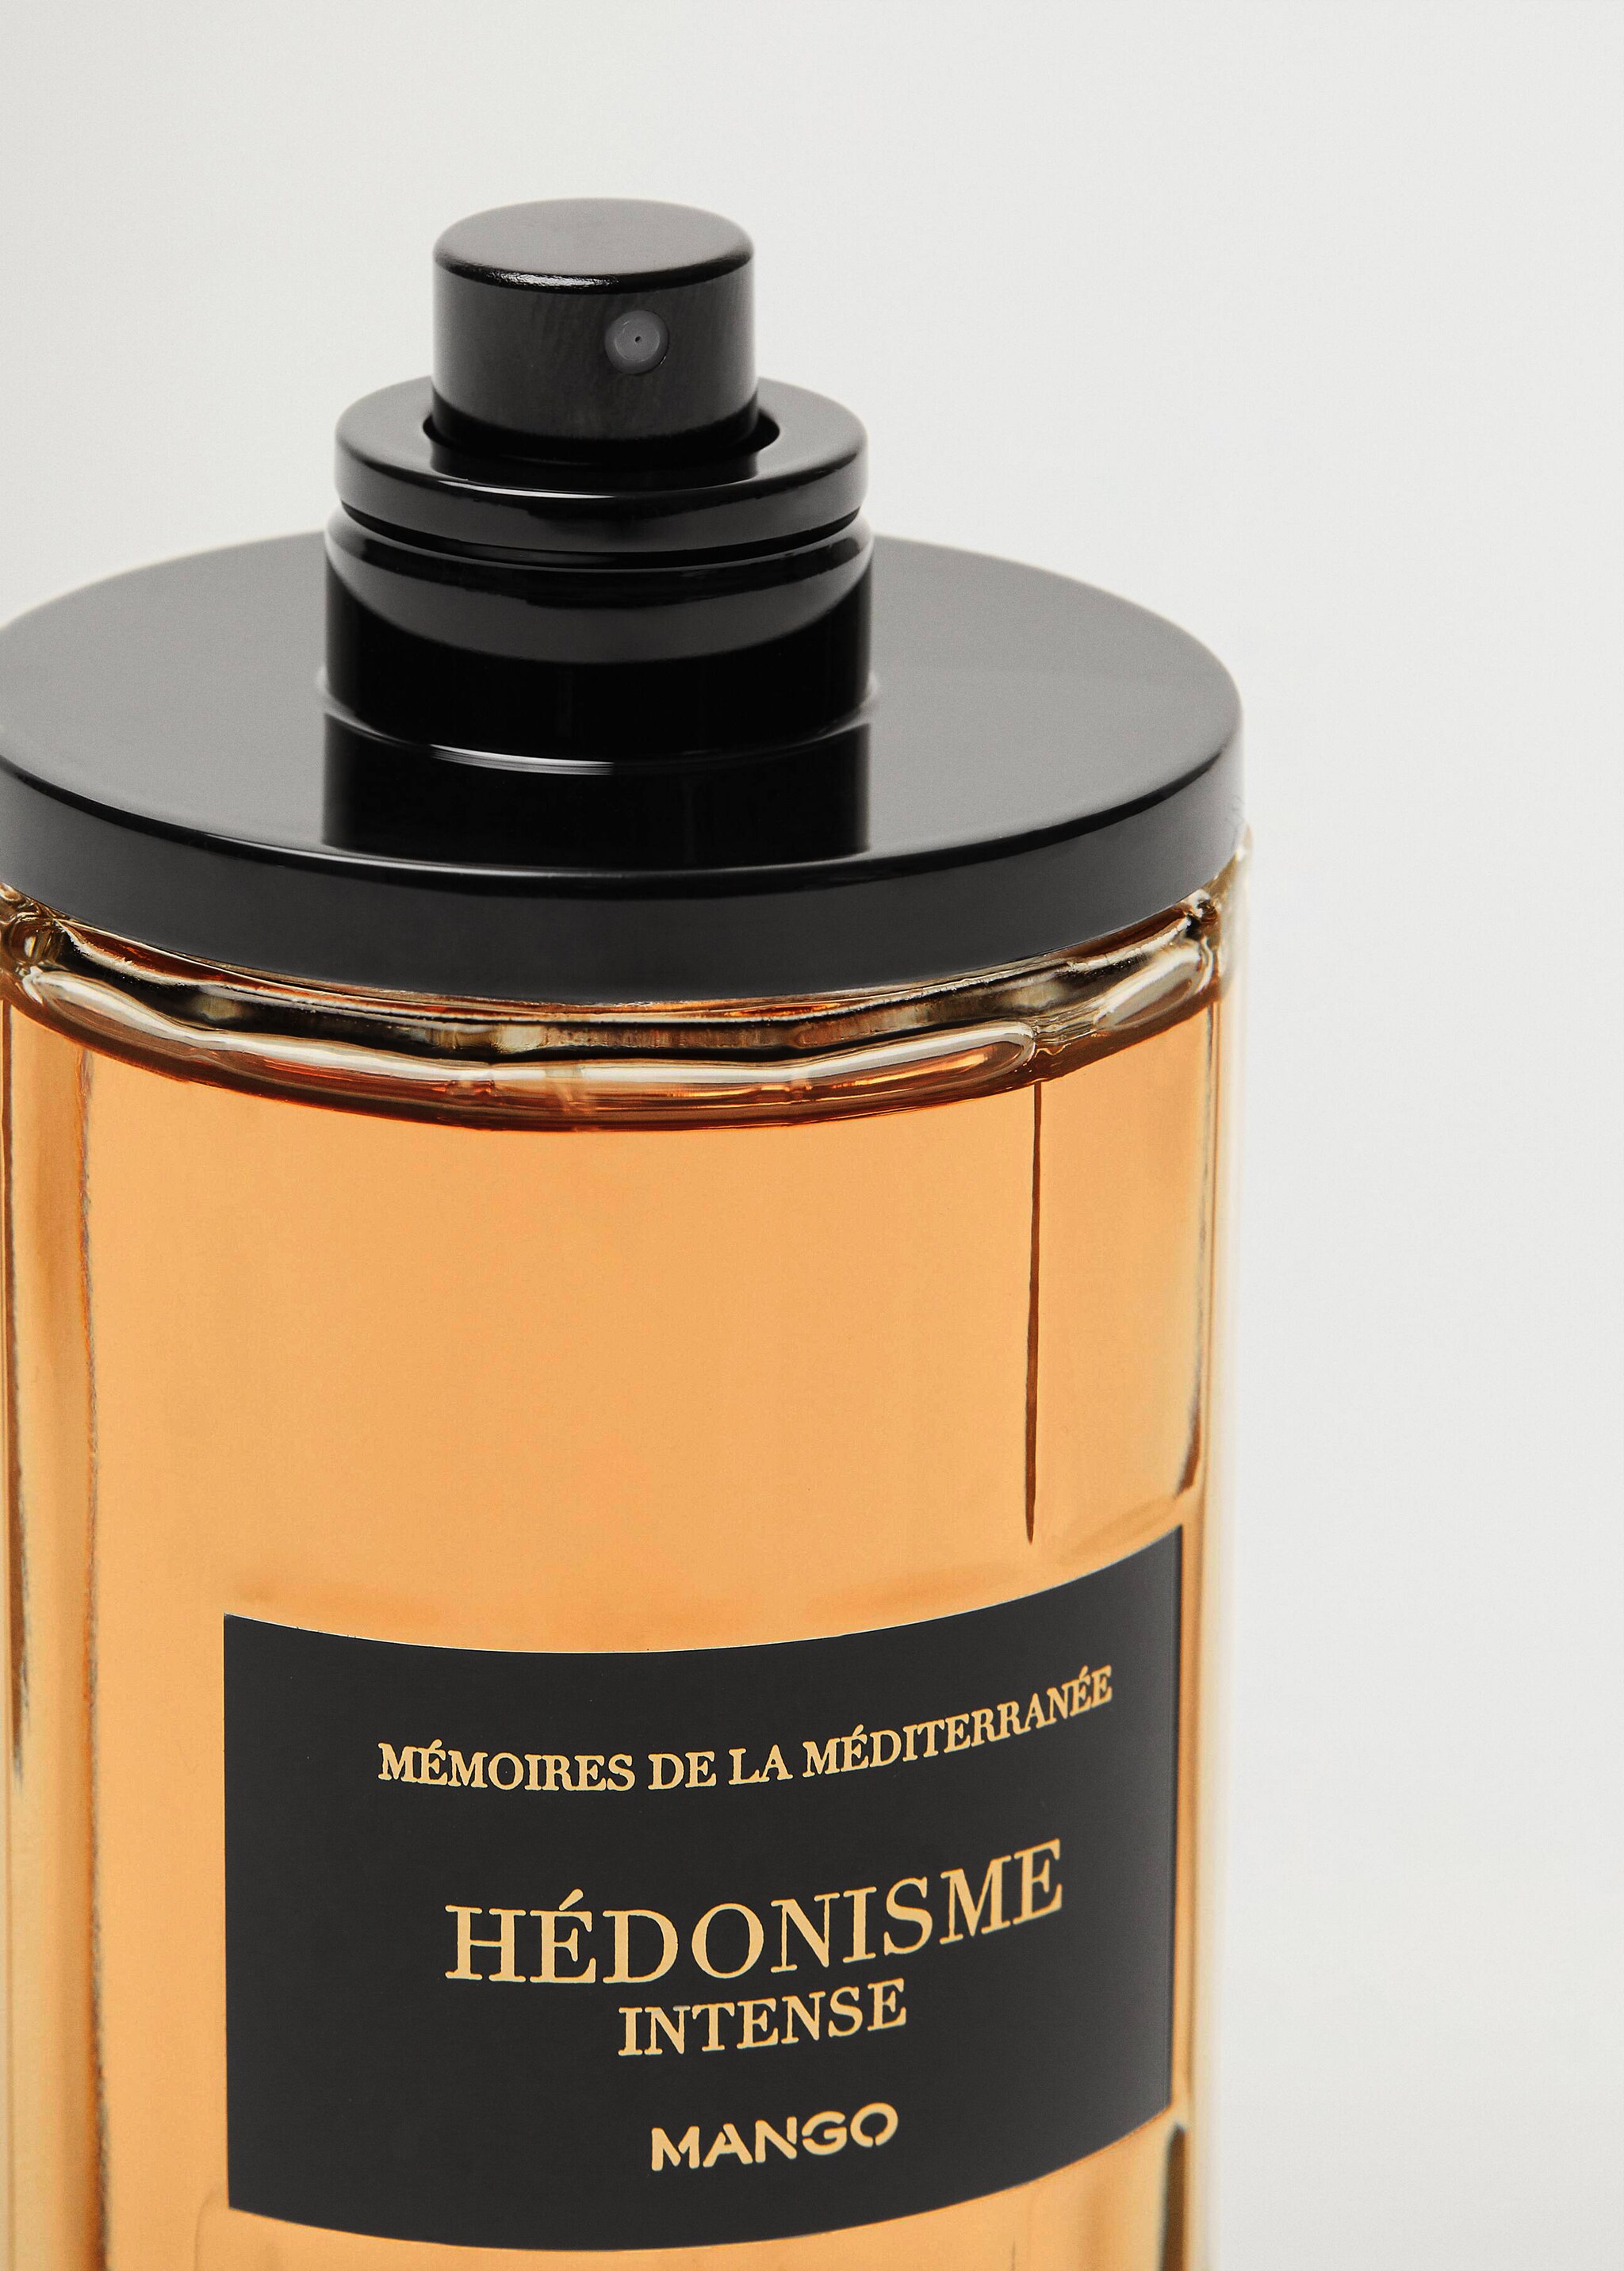 Hédonisme intense fragrance 100 ml - Medium plane